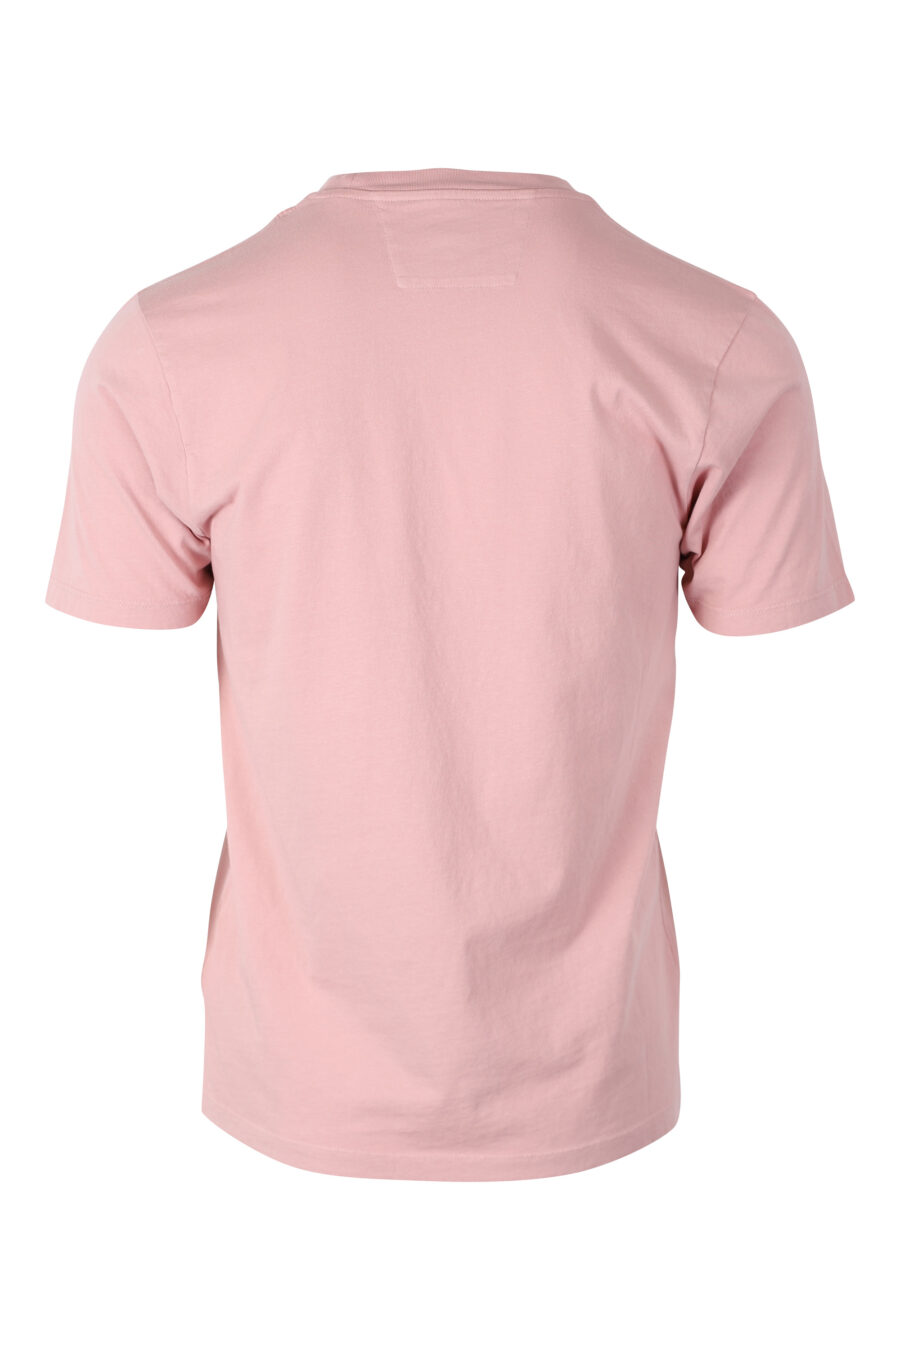 Camiseta rosa con maxilogo "spray" - IMG 2403